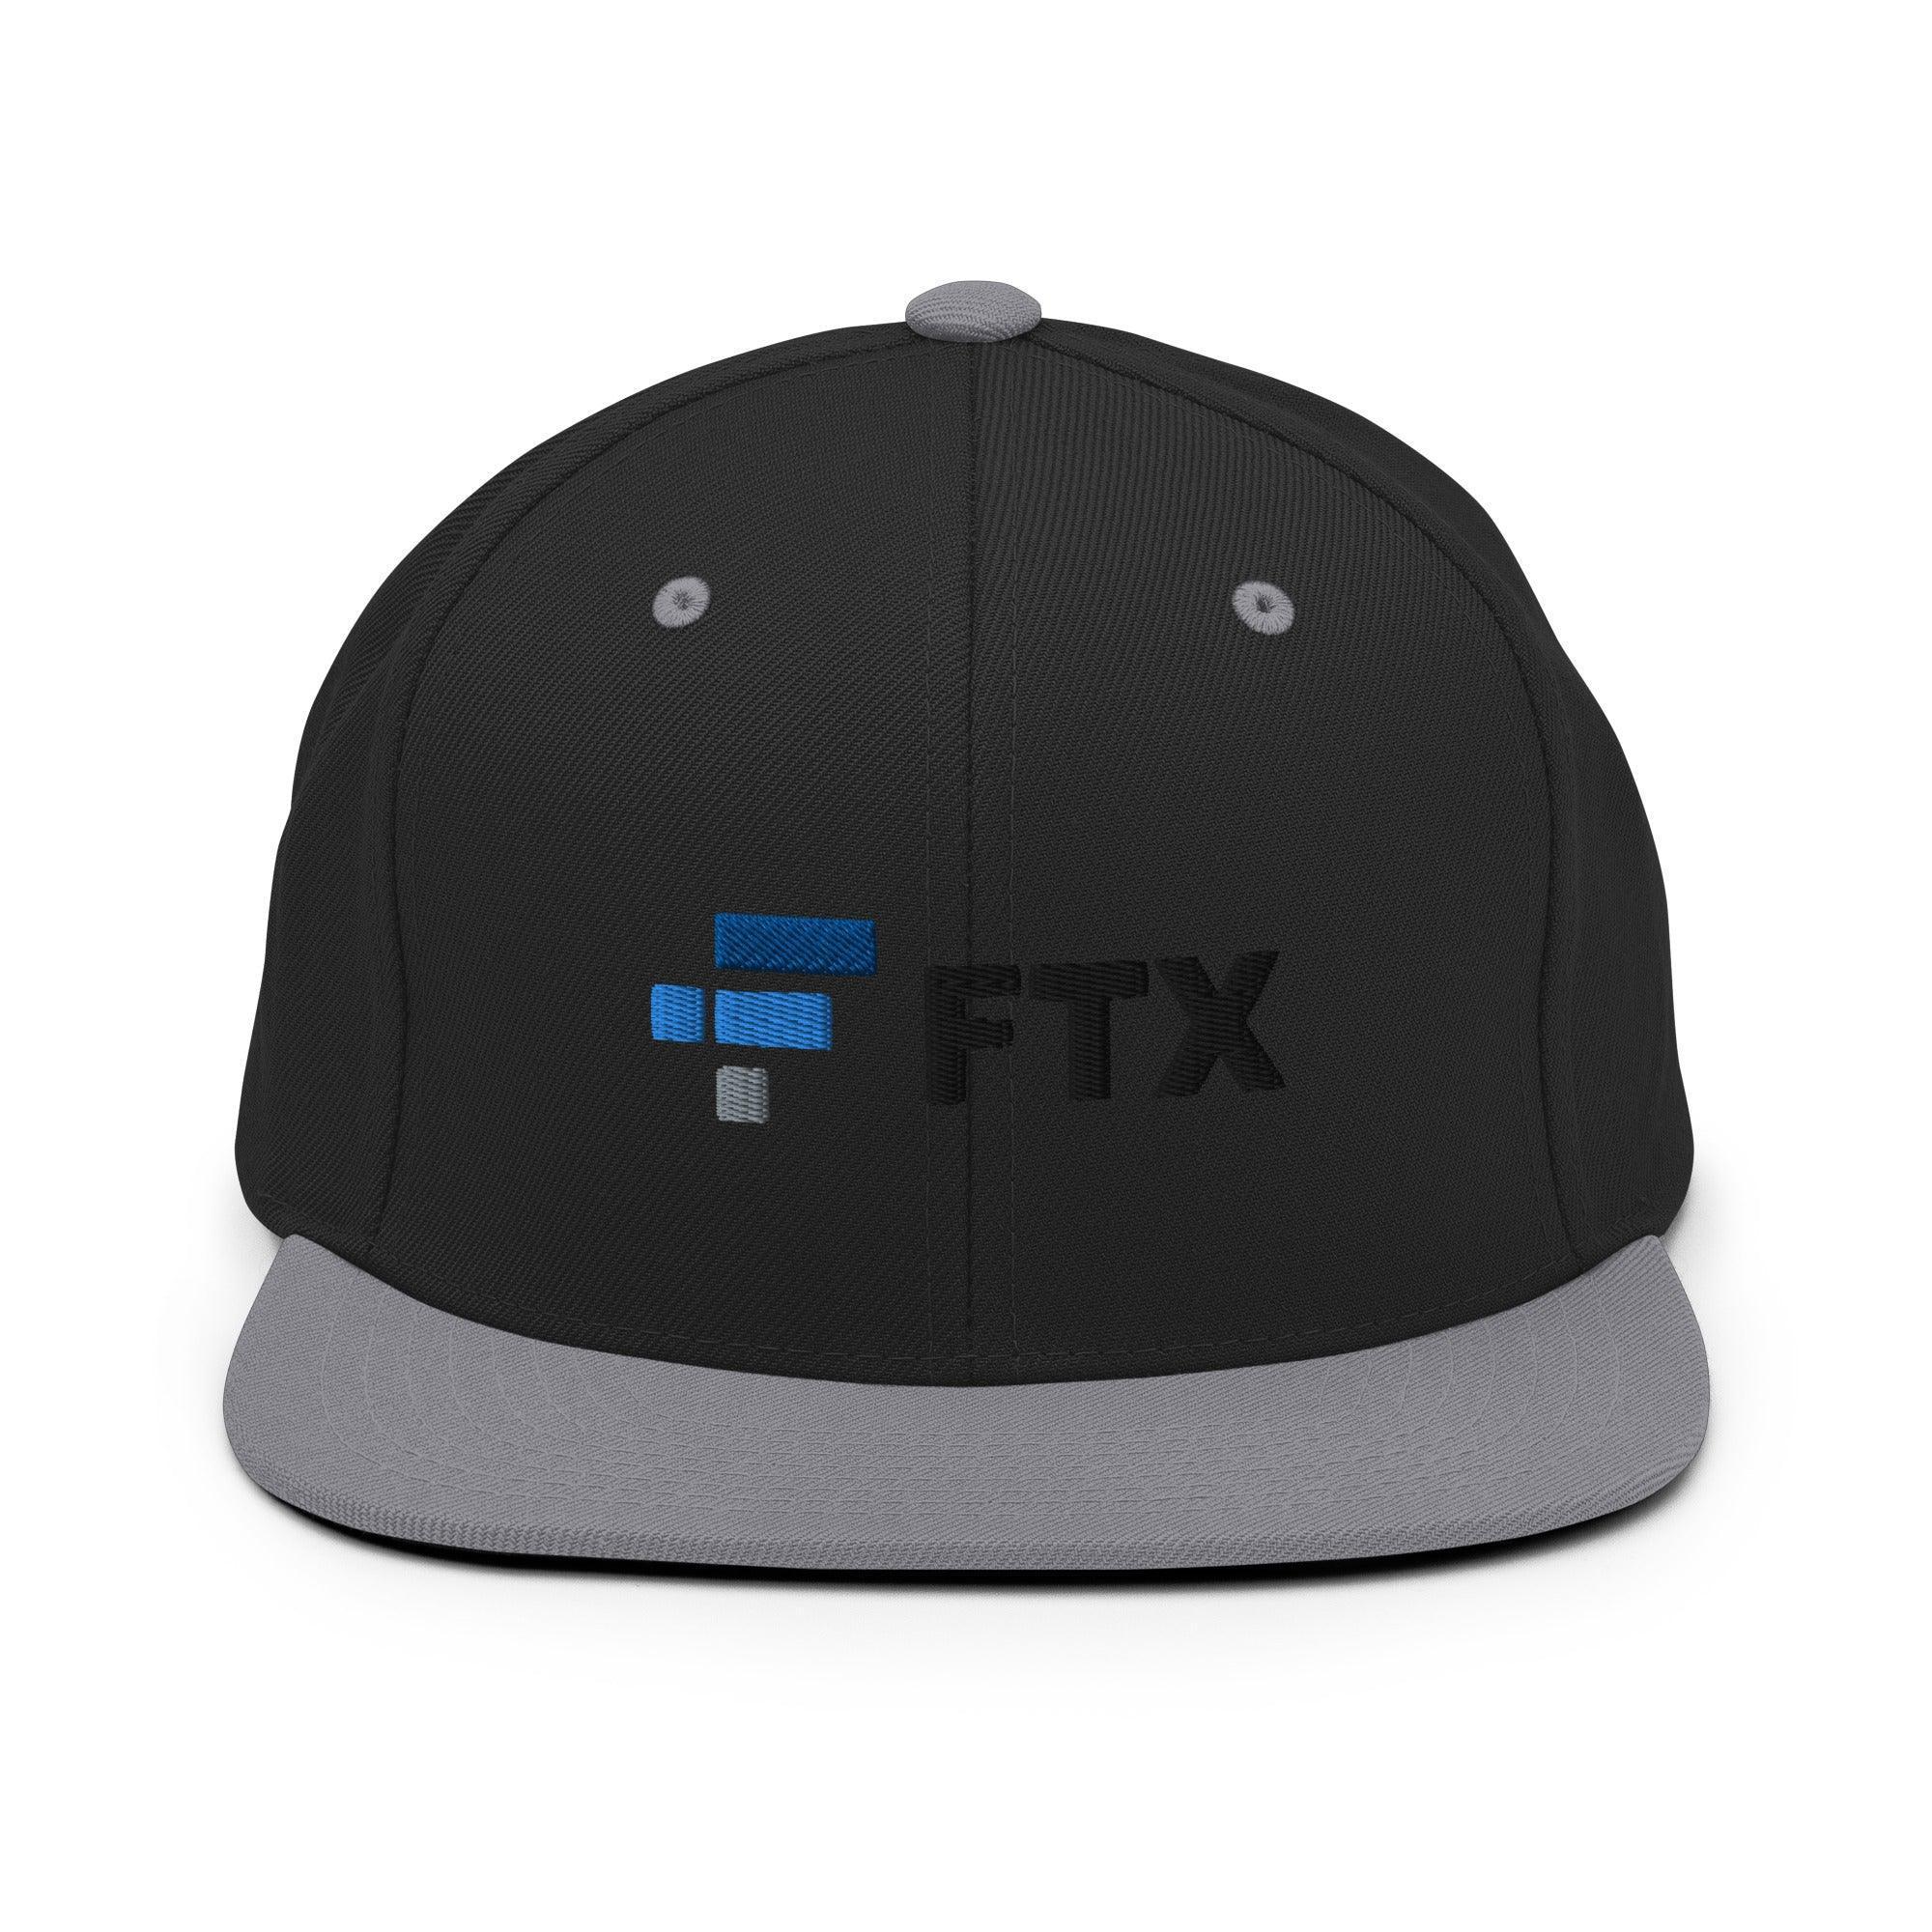 FTX Snapback Hat - InvestmenTees